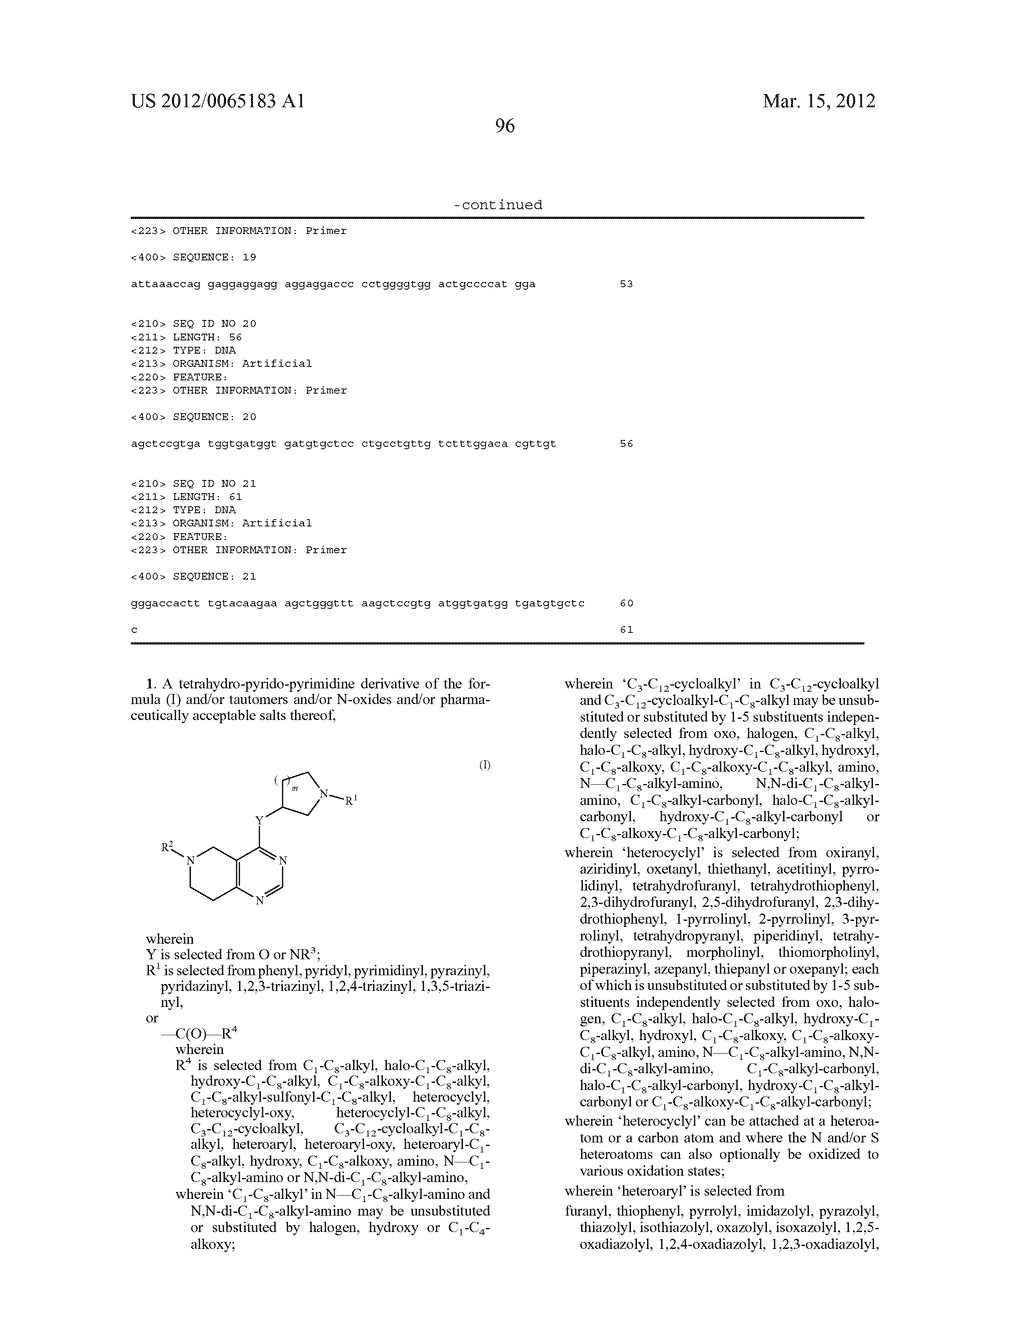 Tetrahydro-Pyrido-Pyrimidine Derivatives - diagram, schematic, and image 102